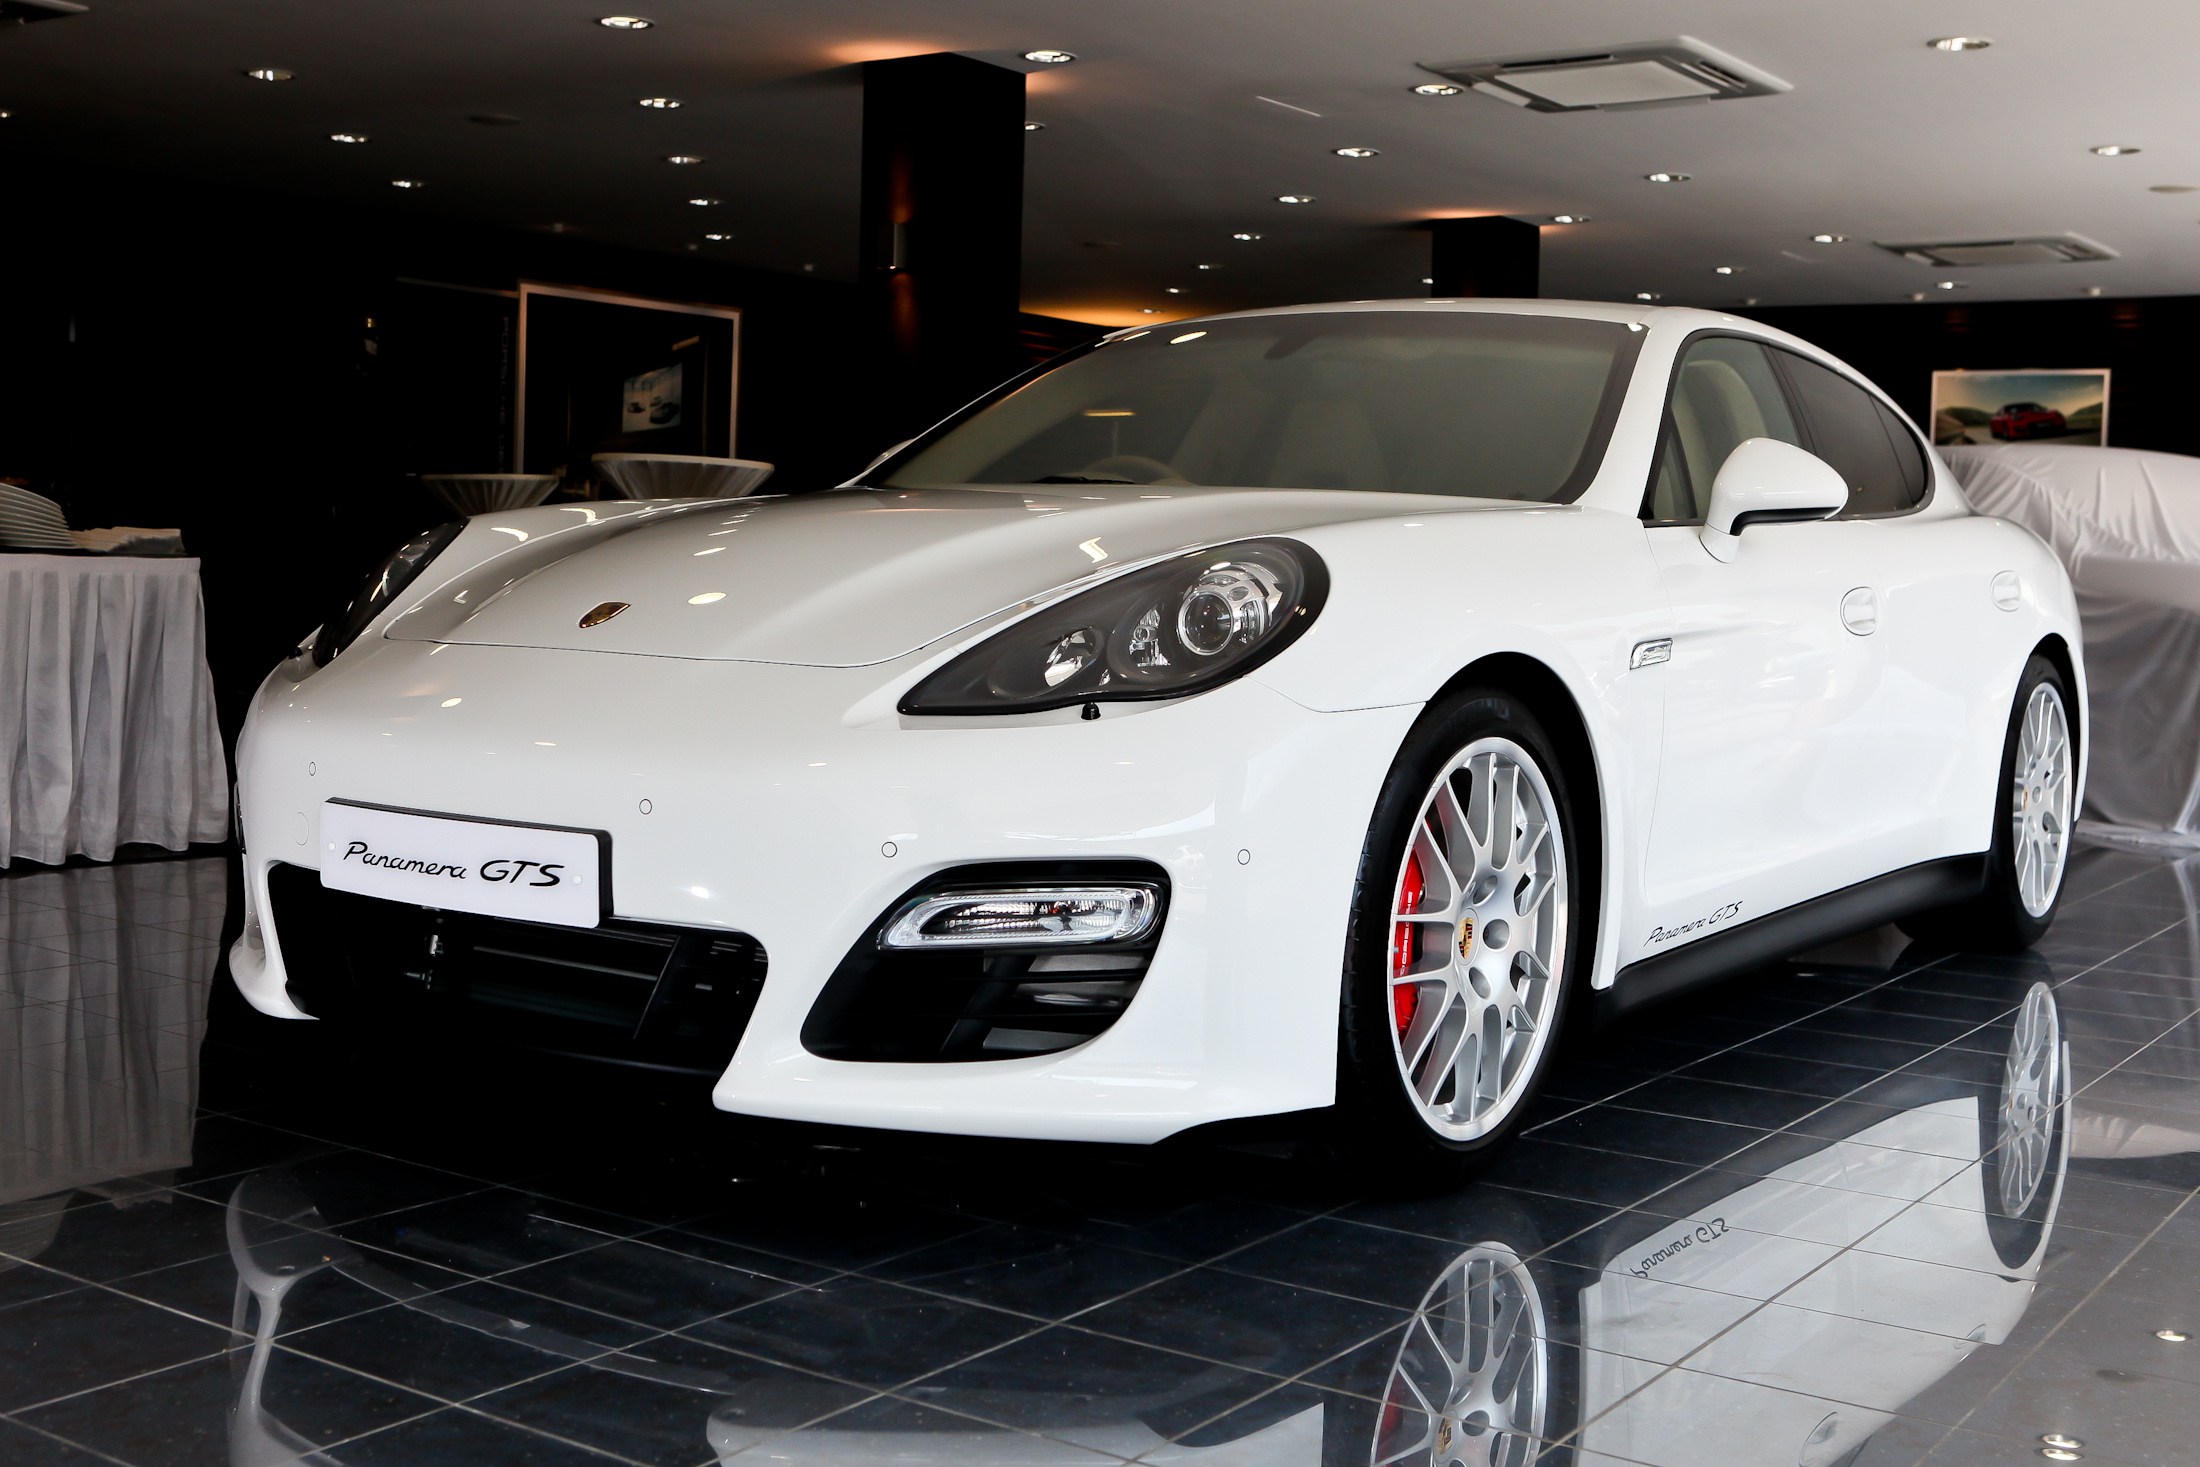 The Porsche Panamera GTS